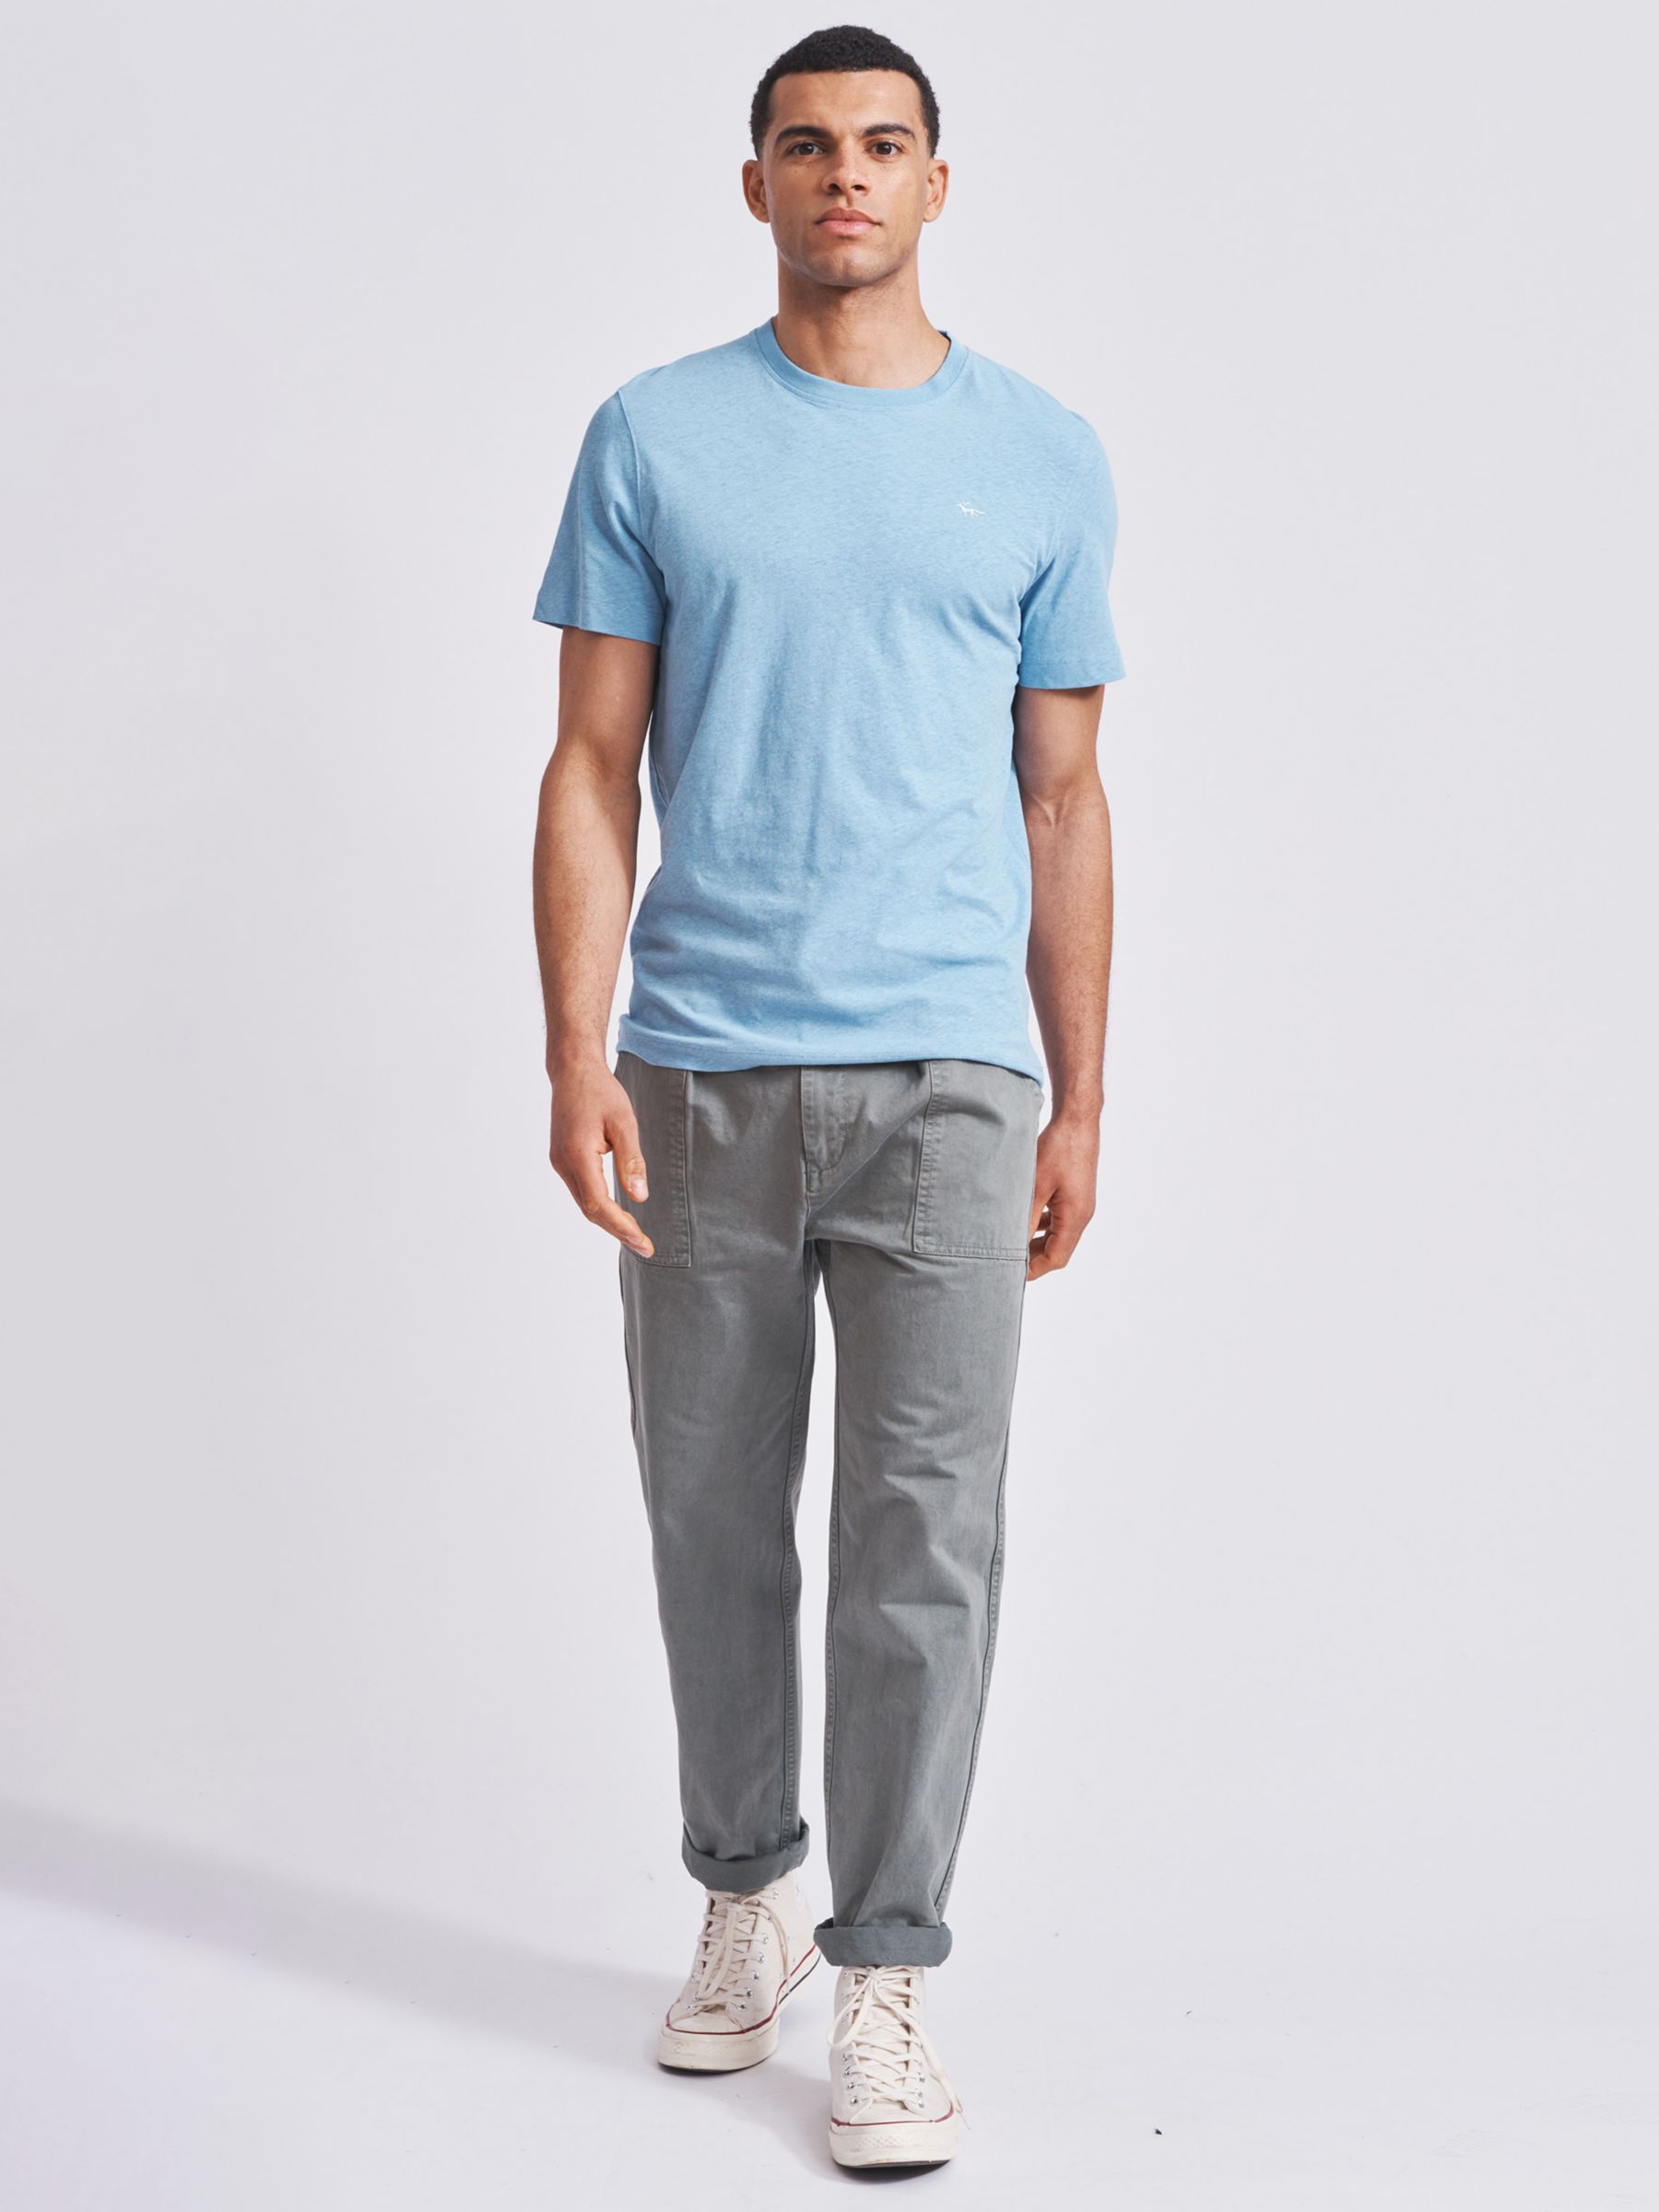 Aubin Hampton Cotton Linen T-Shirt, Blue, S